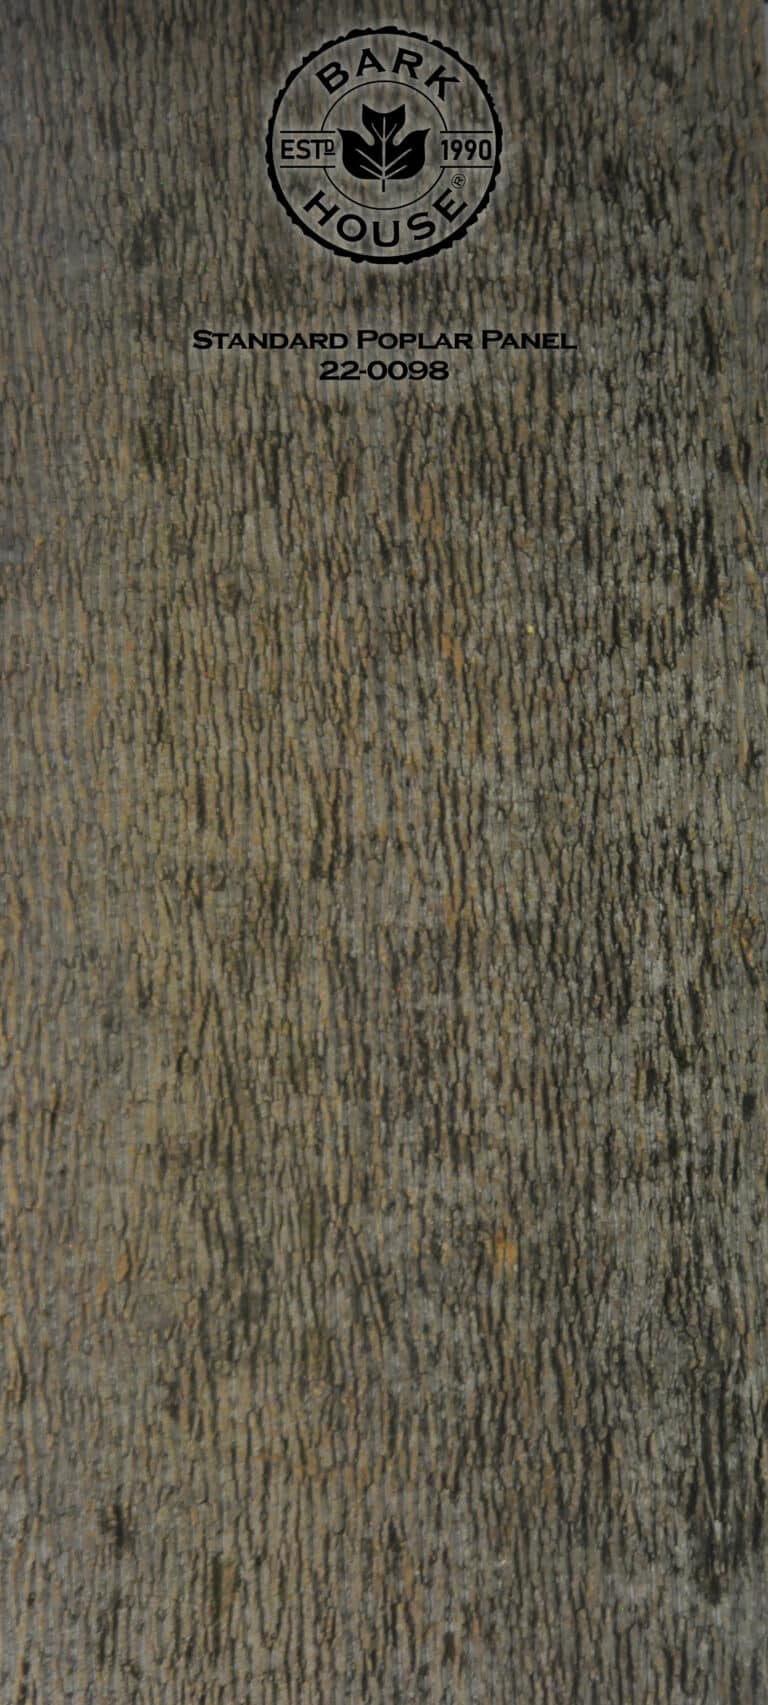 Bark House poplar bark panel SKU POPP-STD-22-0098